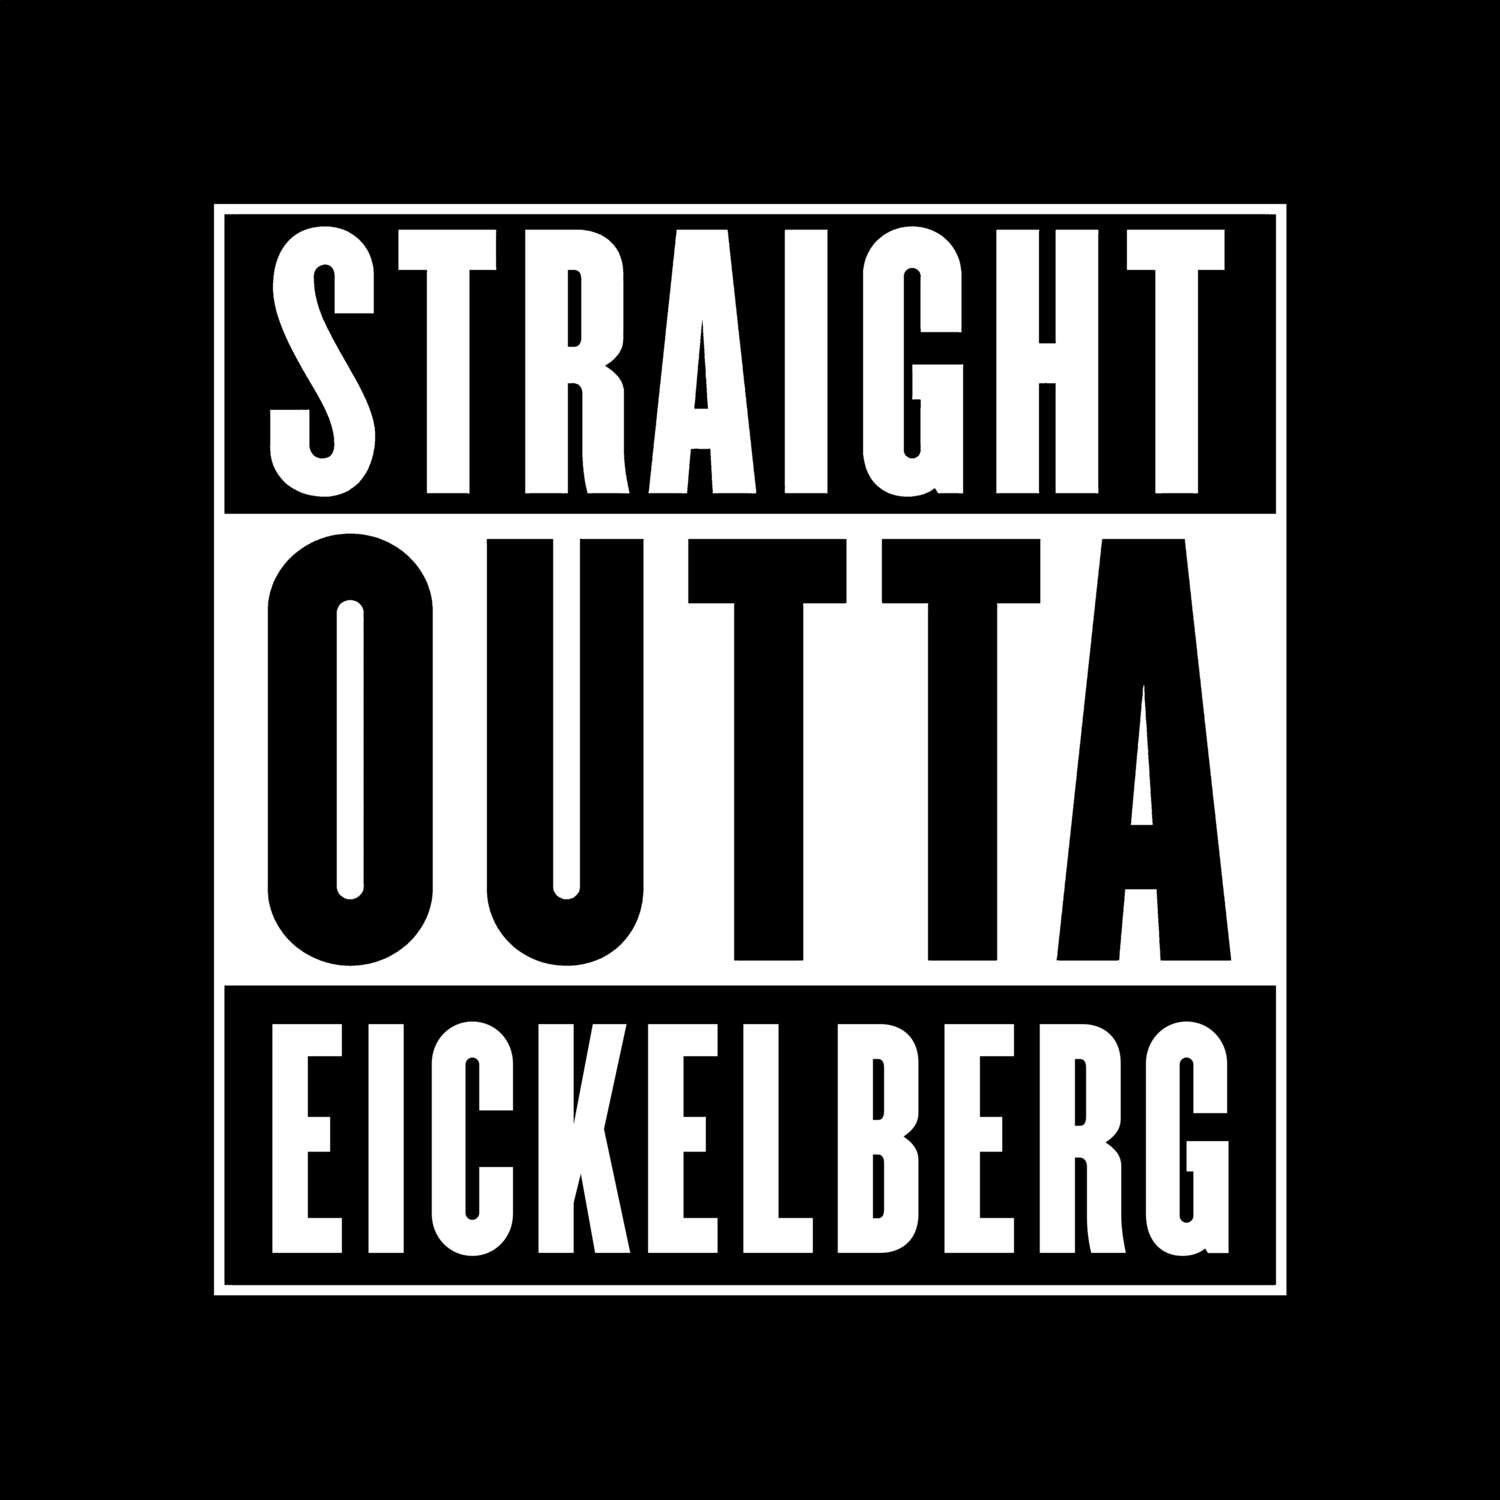 Eickelberg T-Shirt »Straight Outta«